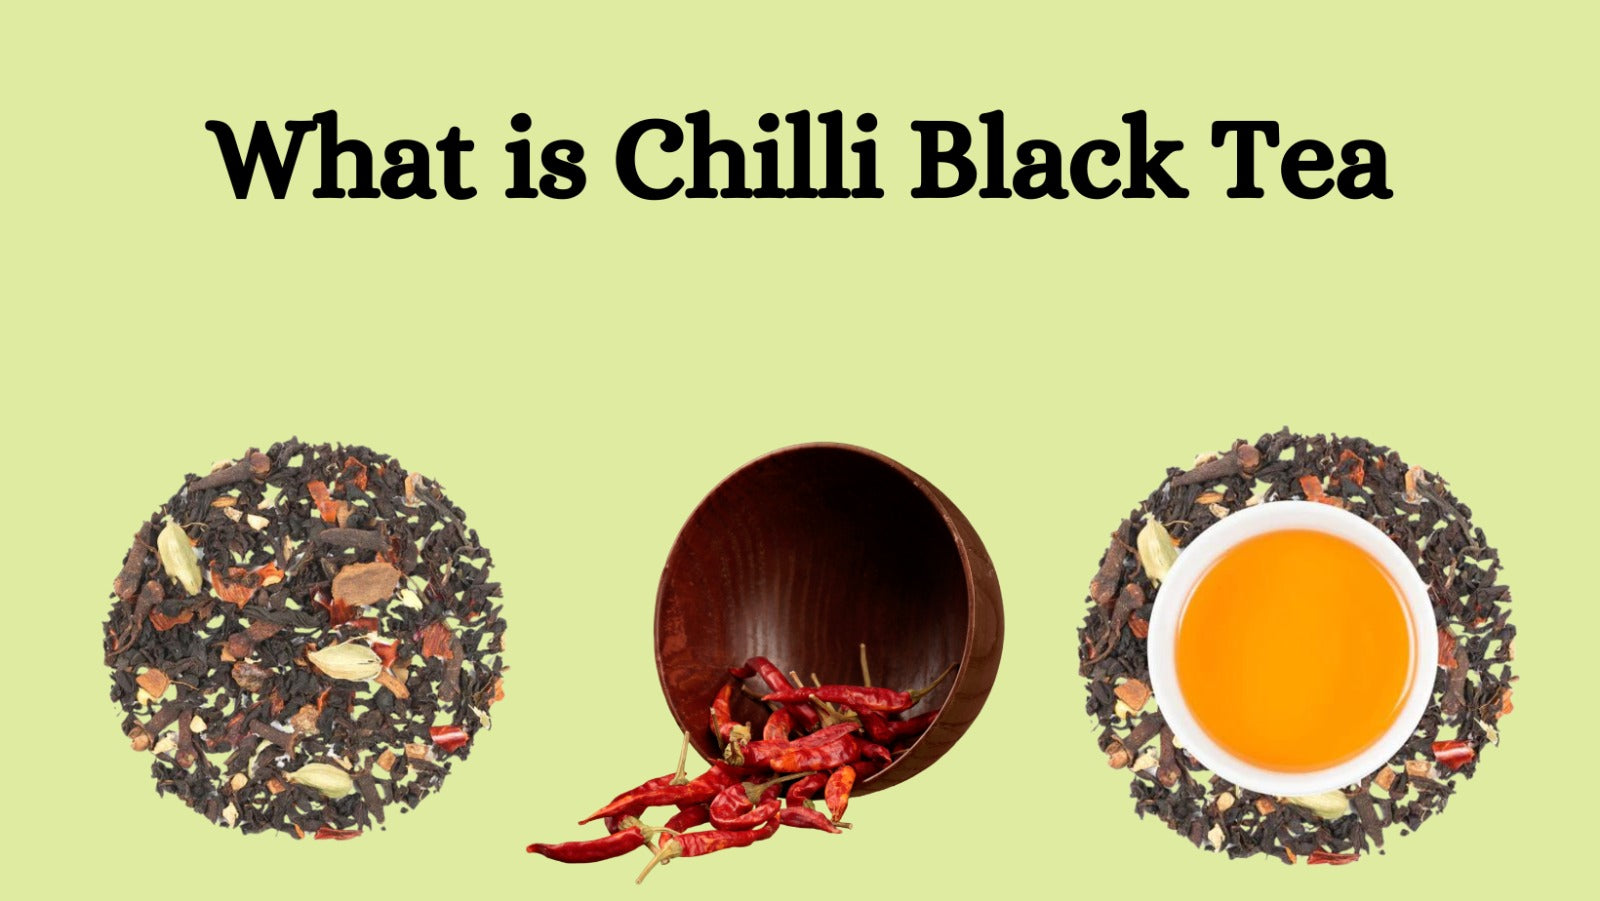 What is Chilli Black Tea